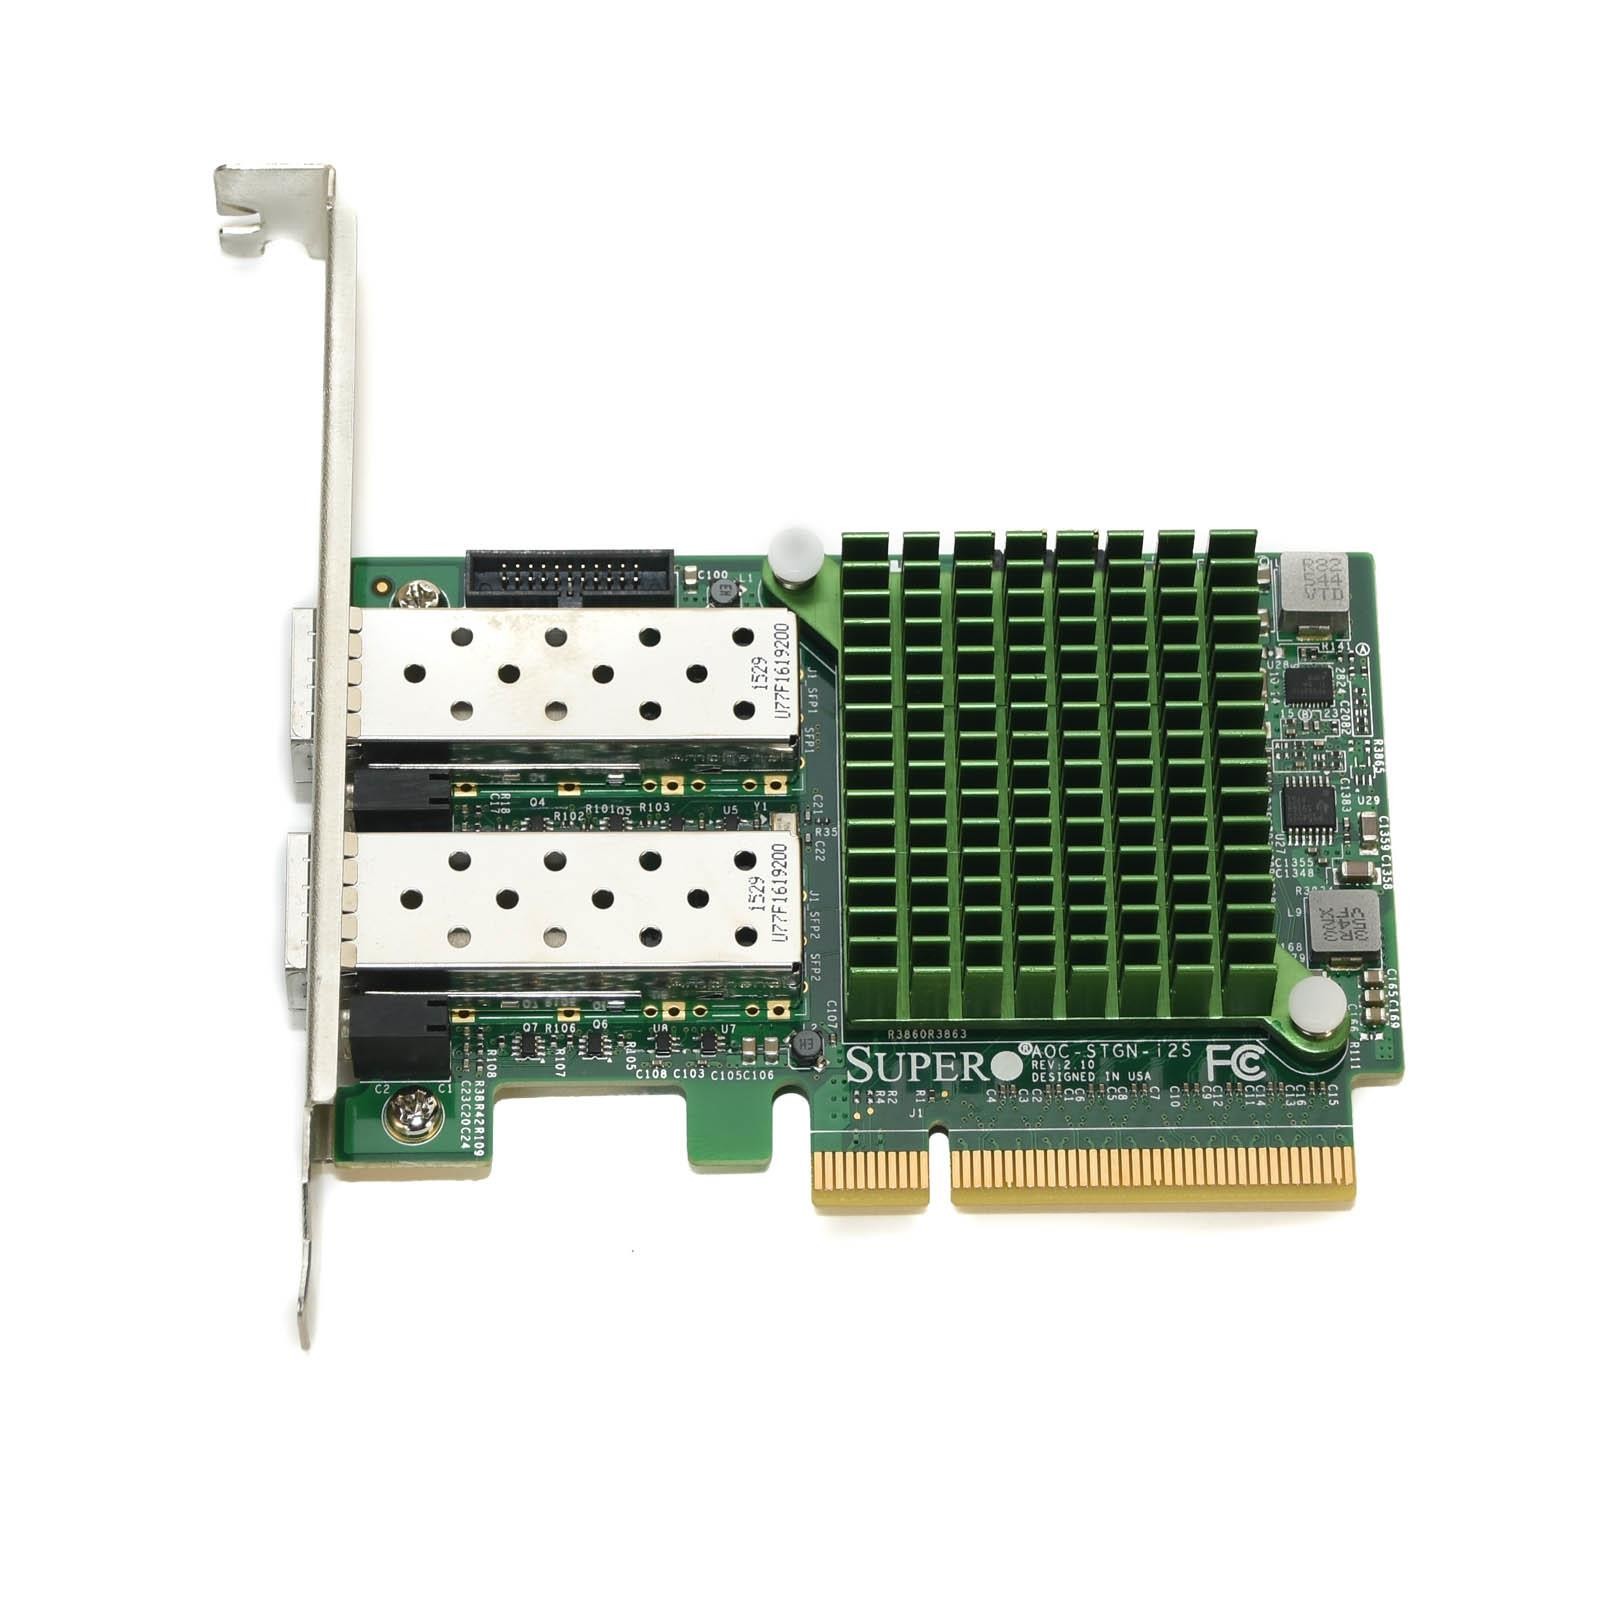 SuperMicro AOC-stgn-i2S Dual 10GbE SFP NIC Intel 82599 X520-DA2 PCIe Rev 1.0 